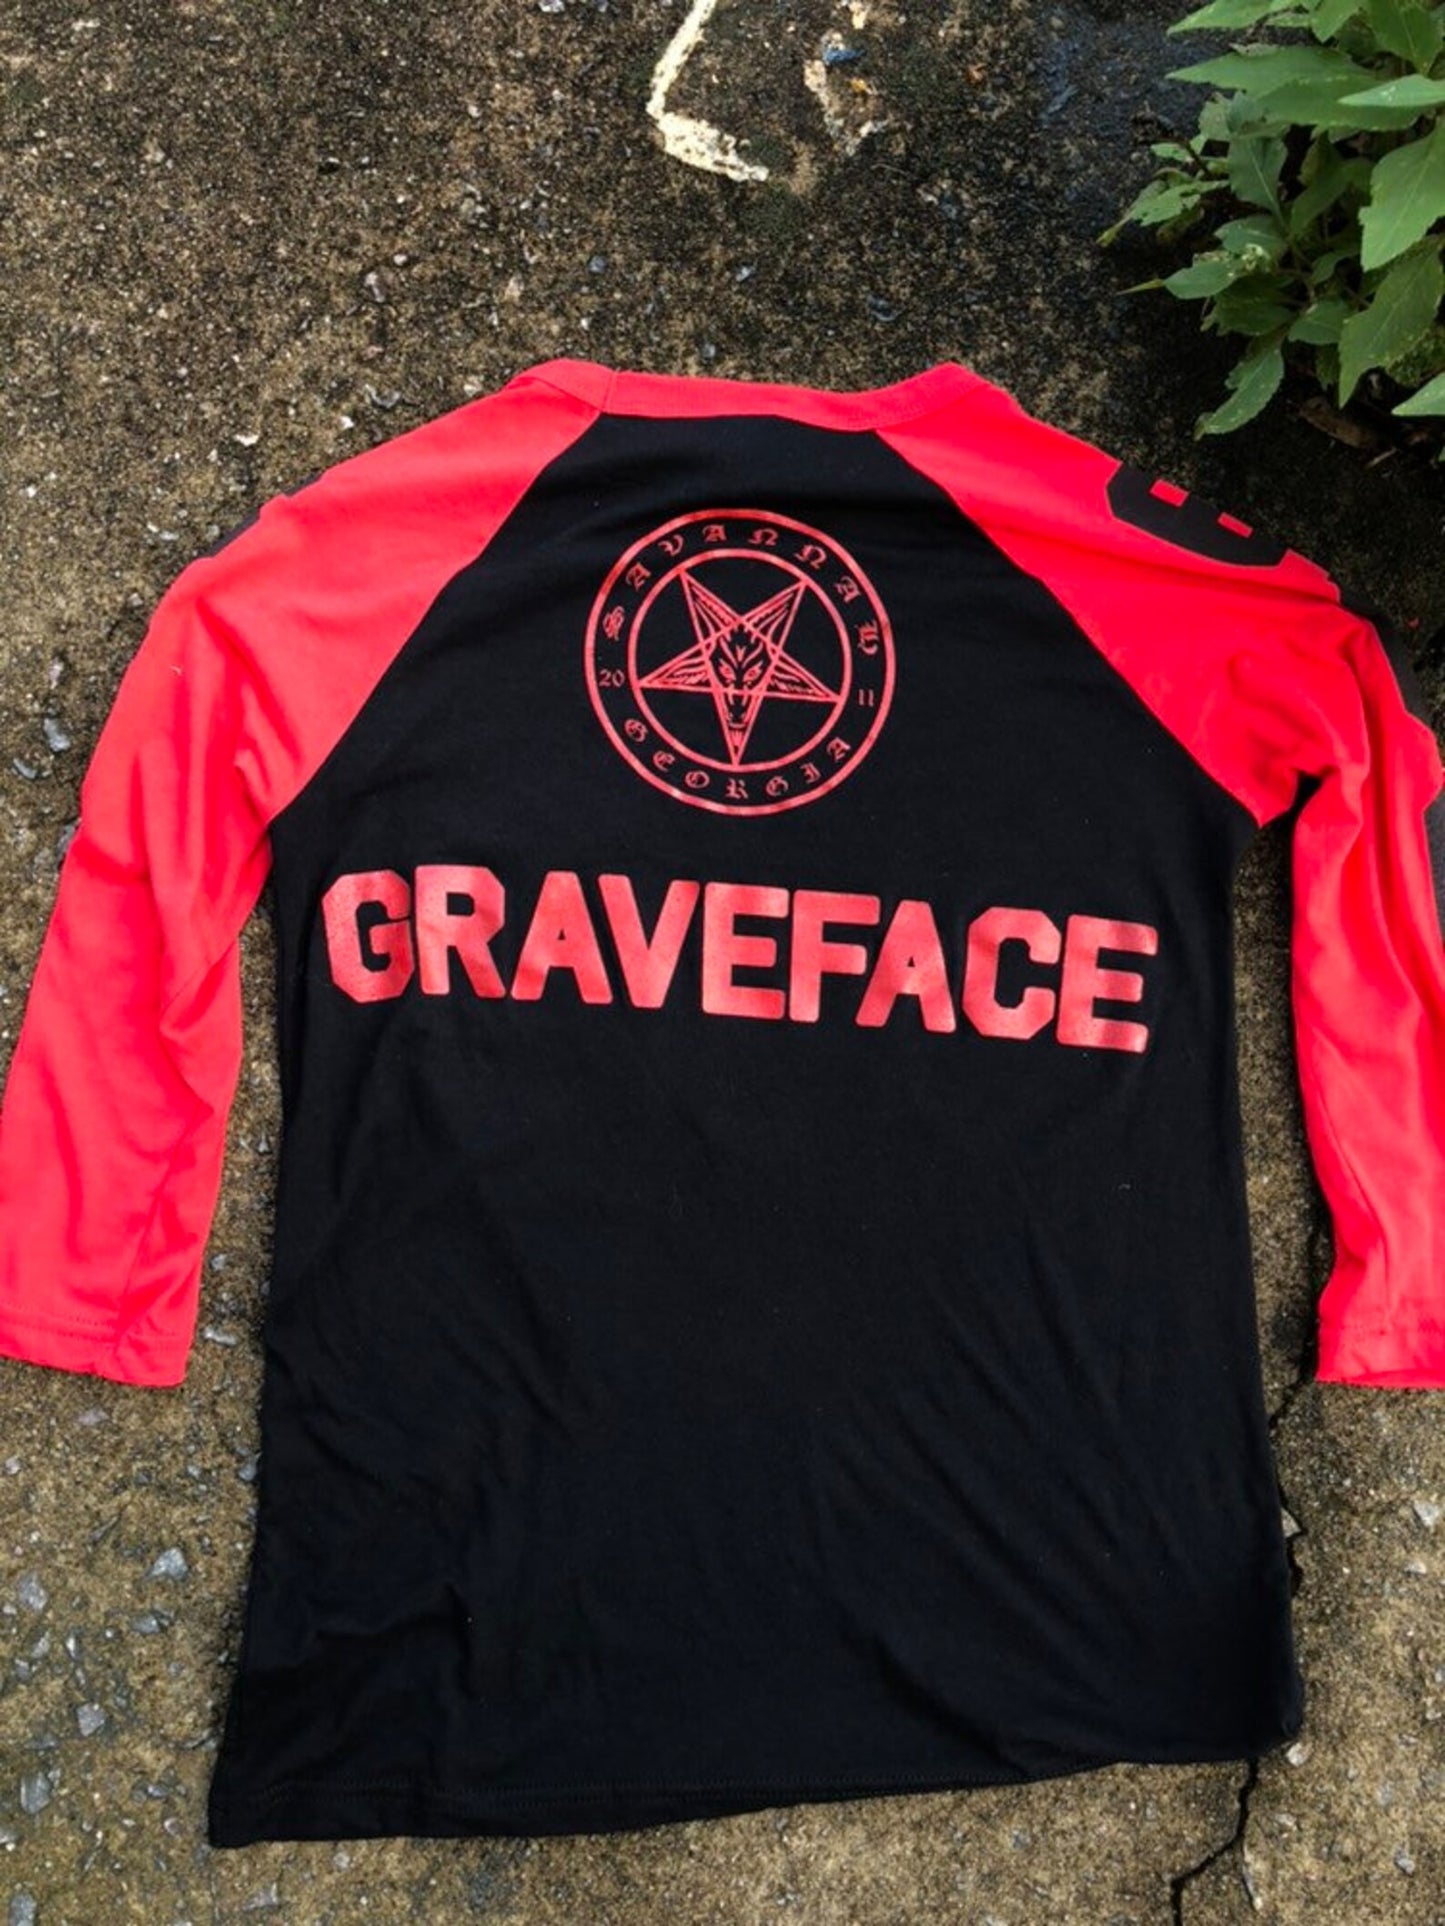 666 Graveface shirt